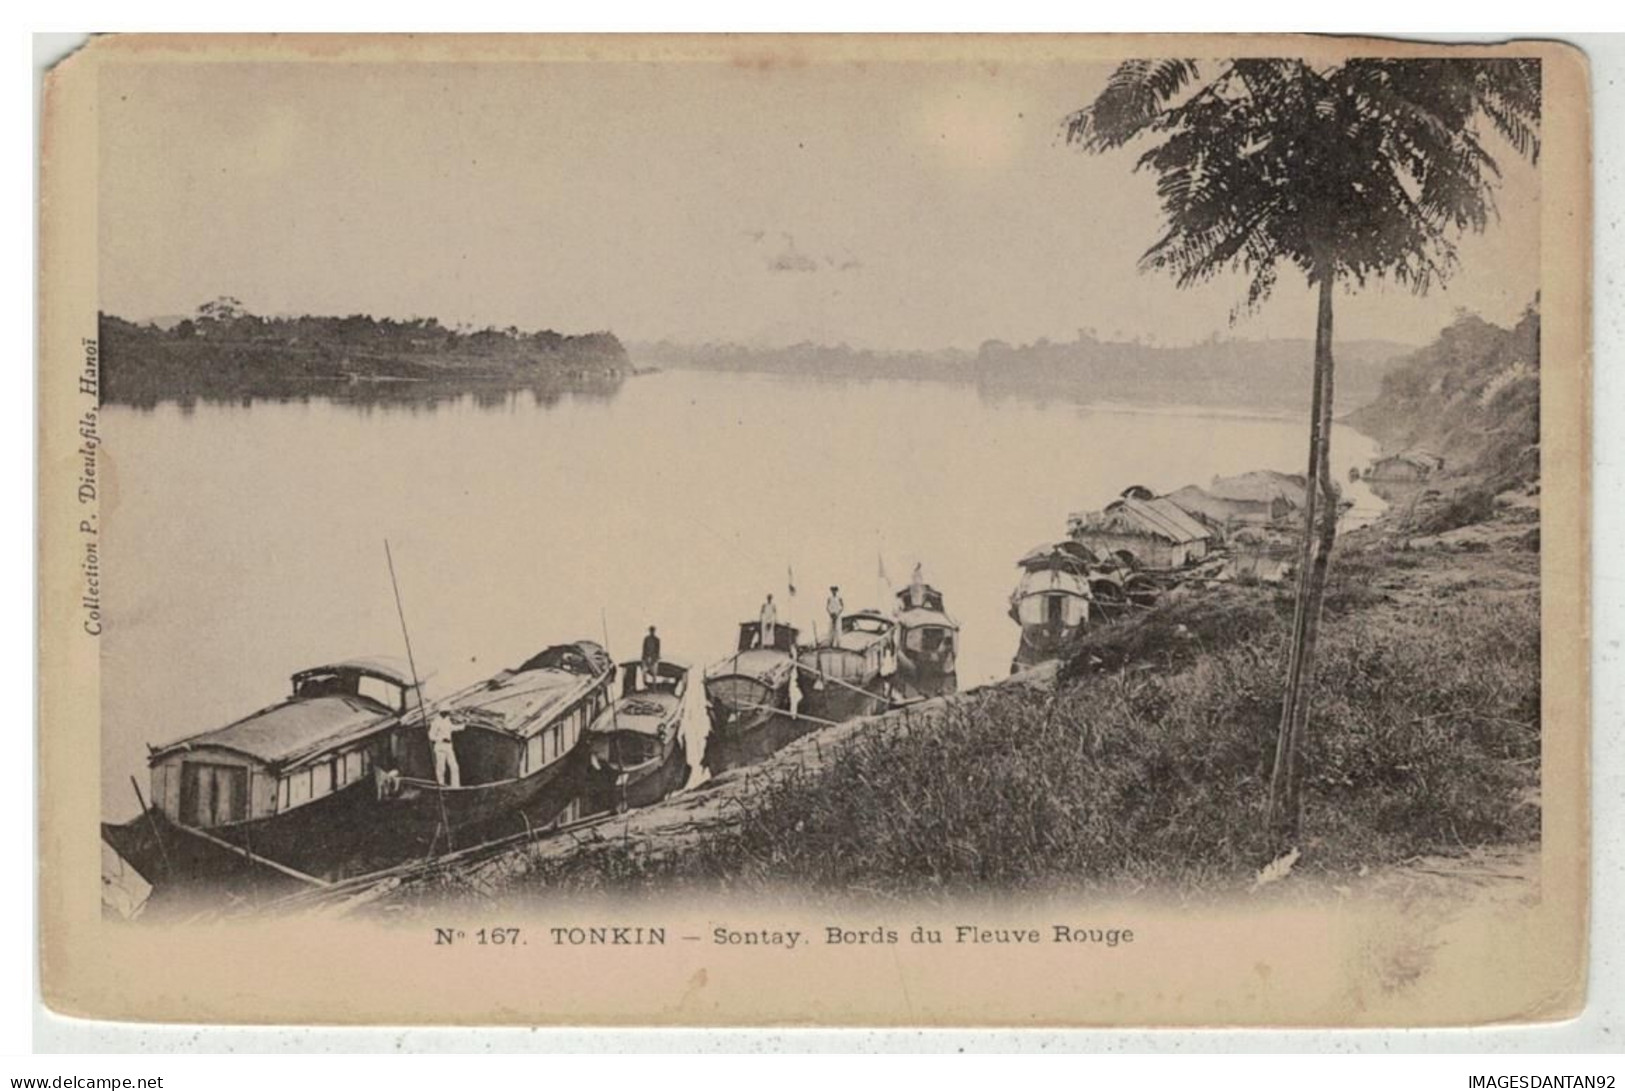 TONKIN INDOCHINE VIETNAM SAIGON #18611 SONTAY BORDS DU FLEUVE ROUGE - Vietnam